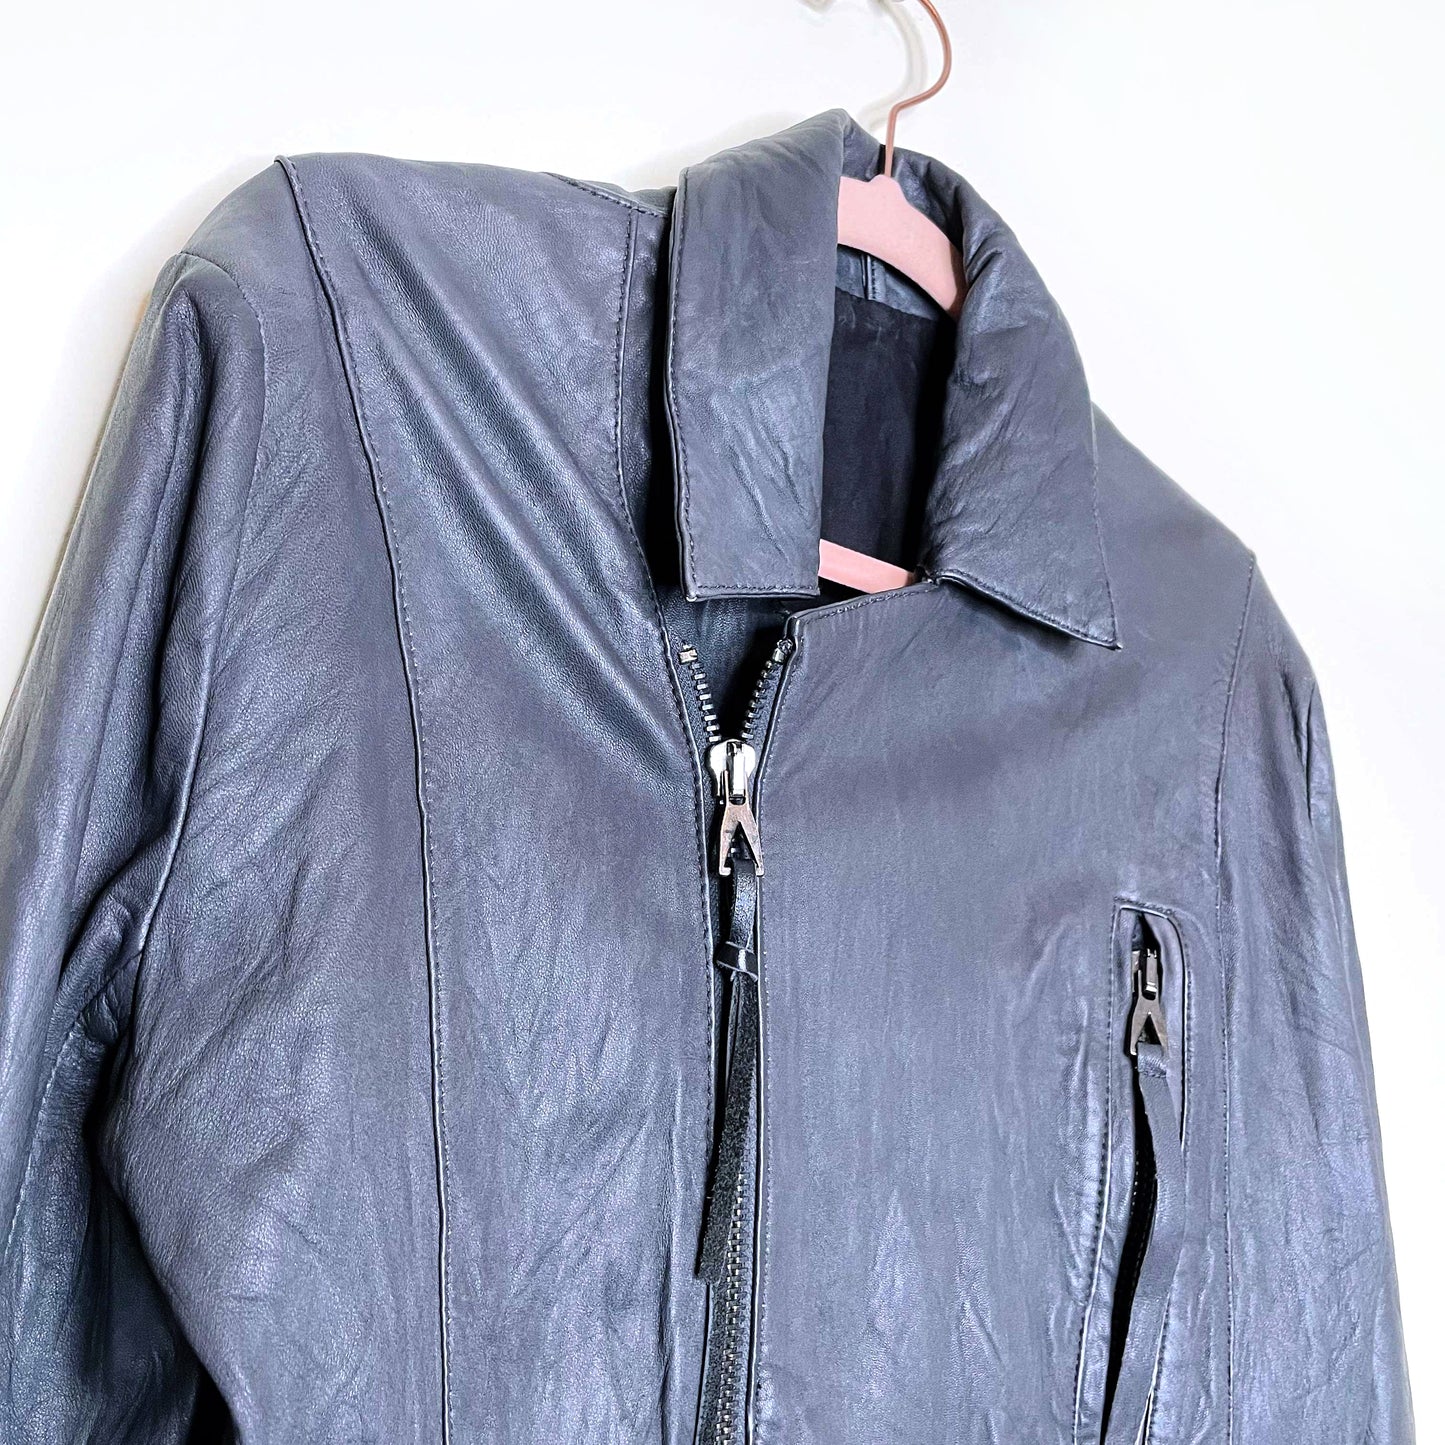 eleven paris grey leather moto jacket - size medium